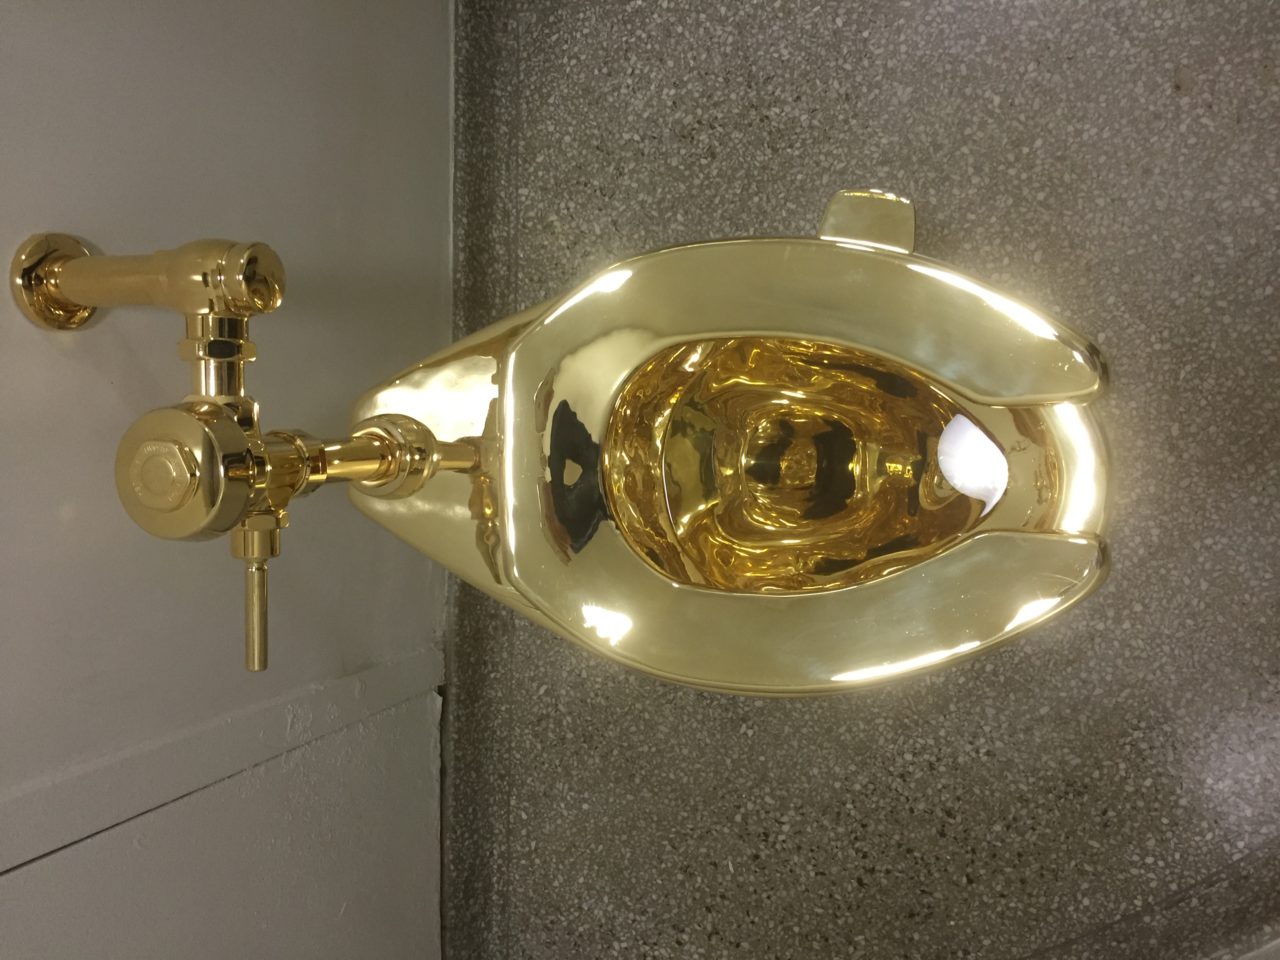 Check Out This Gold Louis Vuitton Toilet - Mix 96